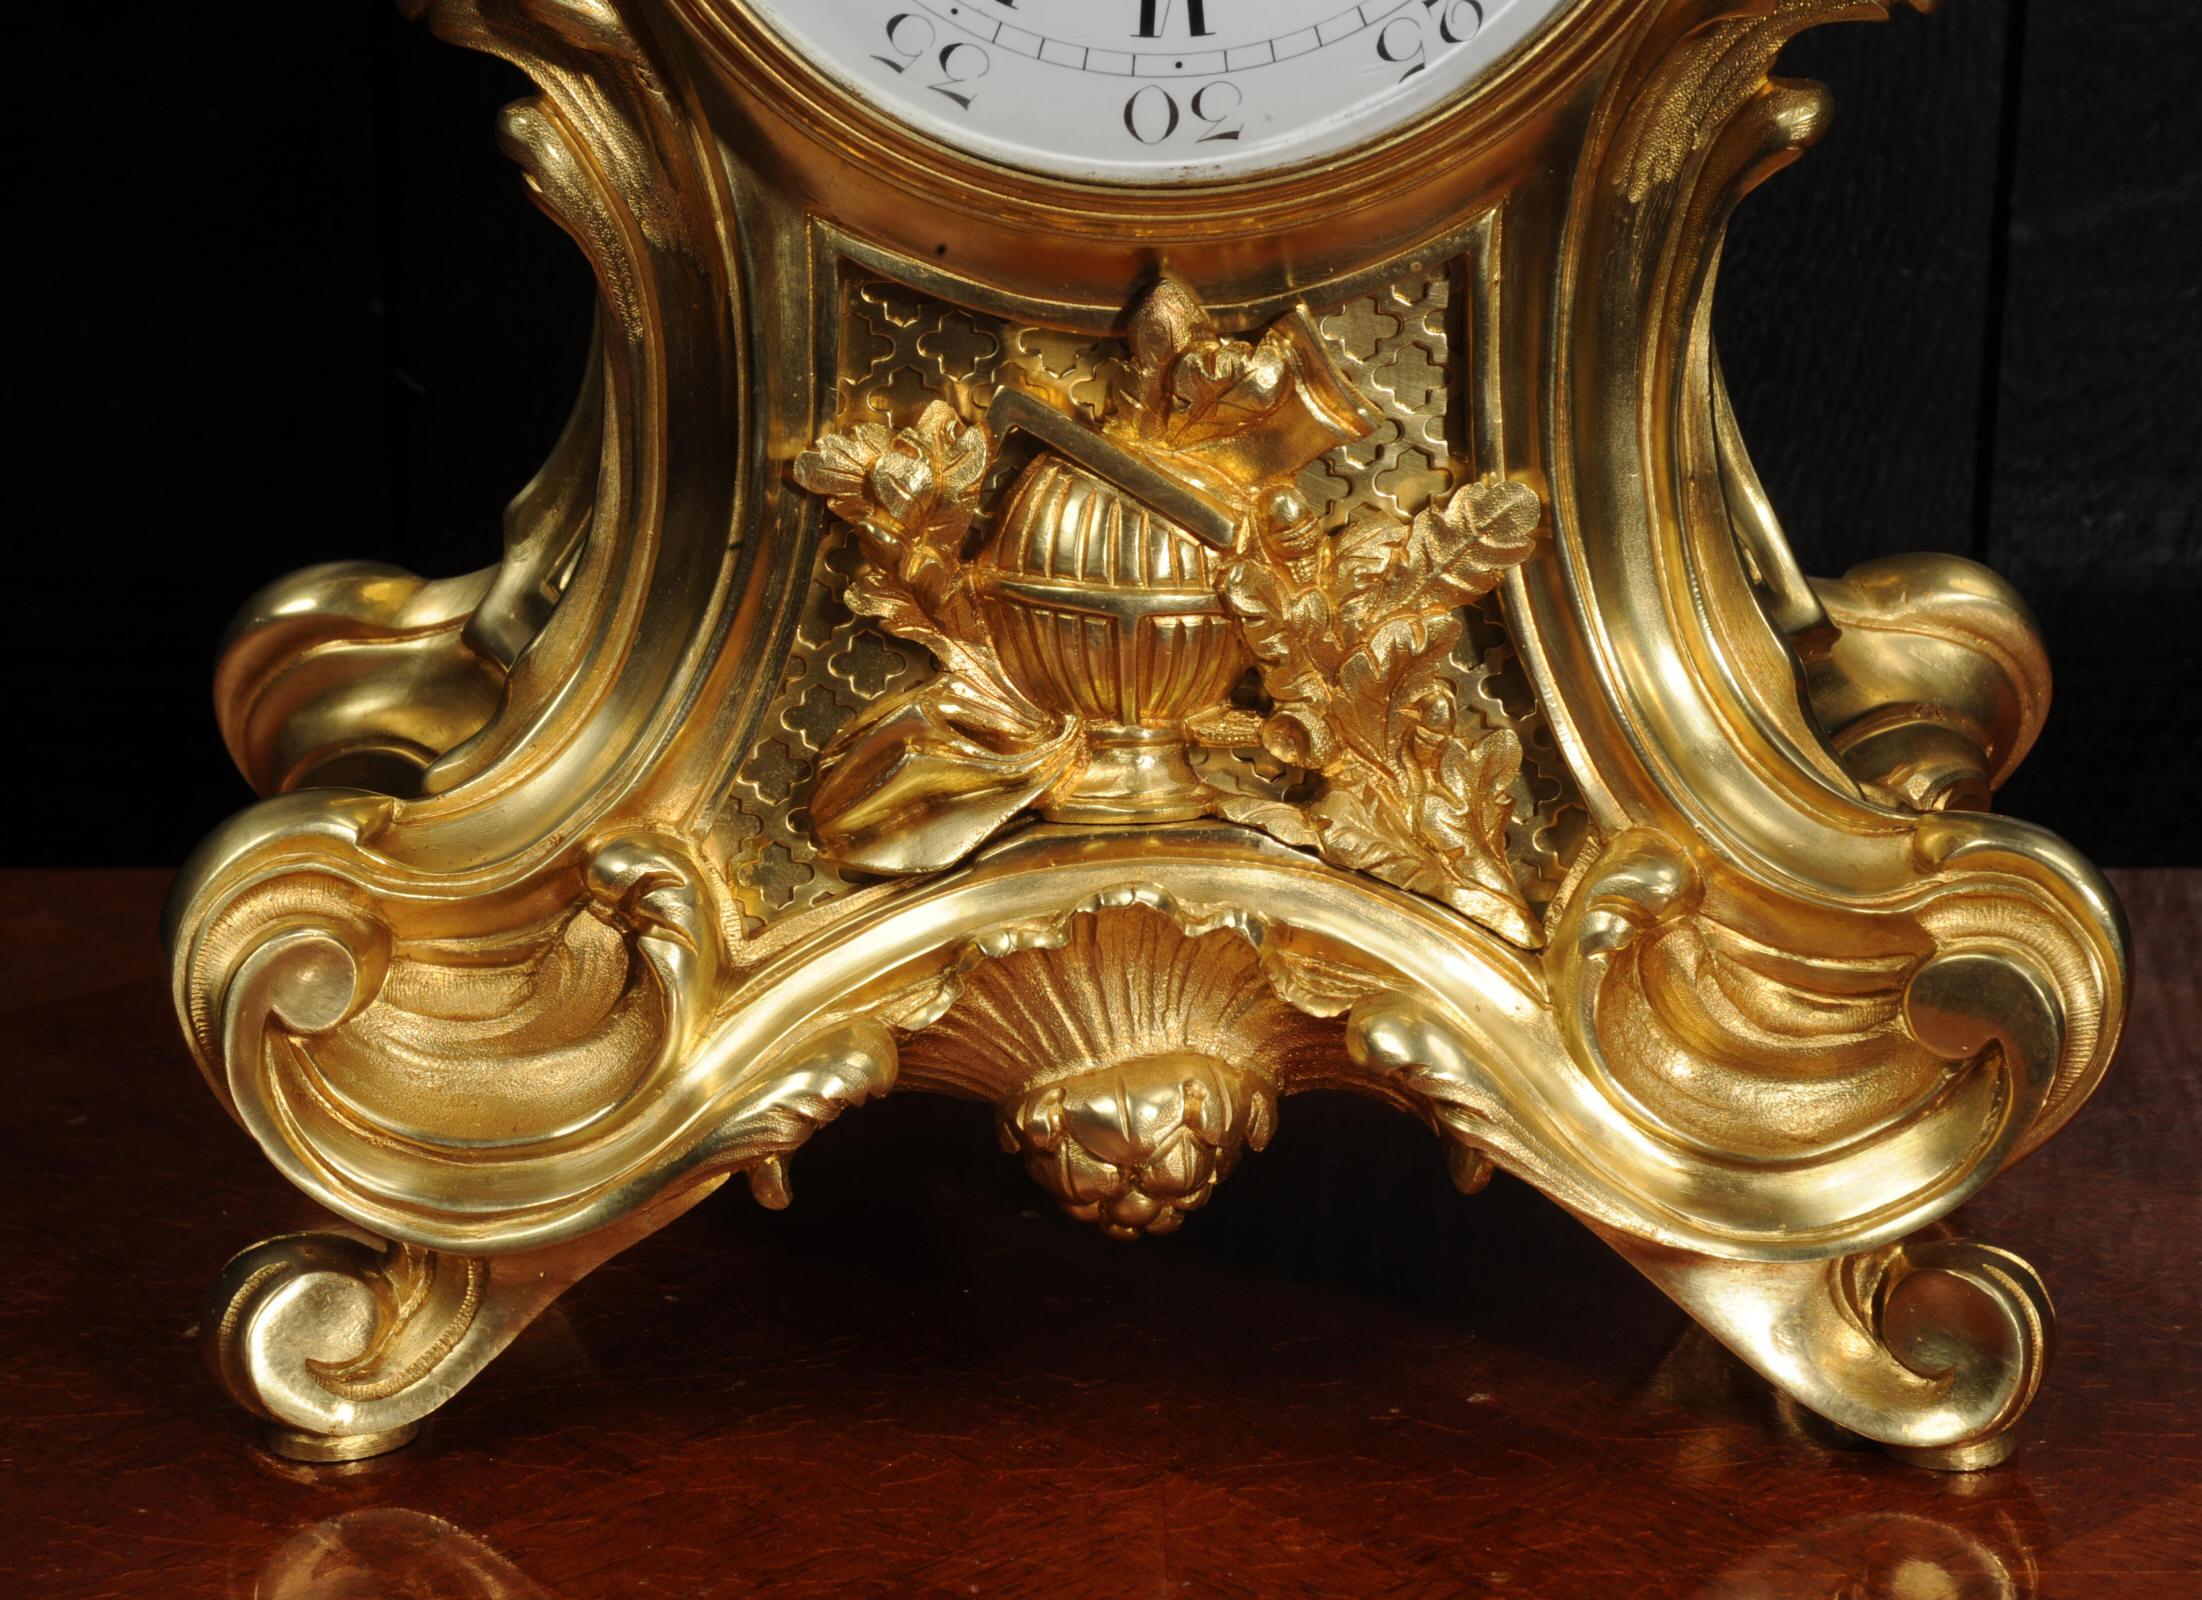 Belle horloge rococo française ancienne en bronze doré - Cupidon en vente 8